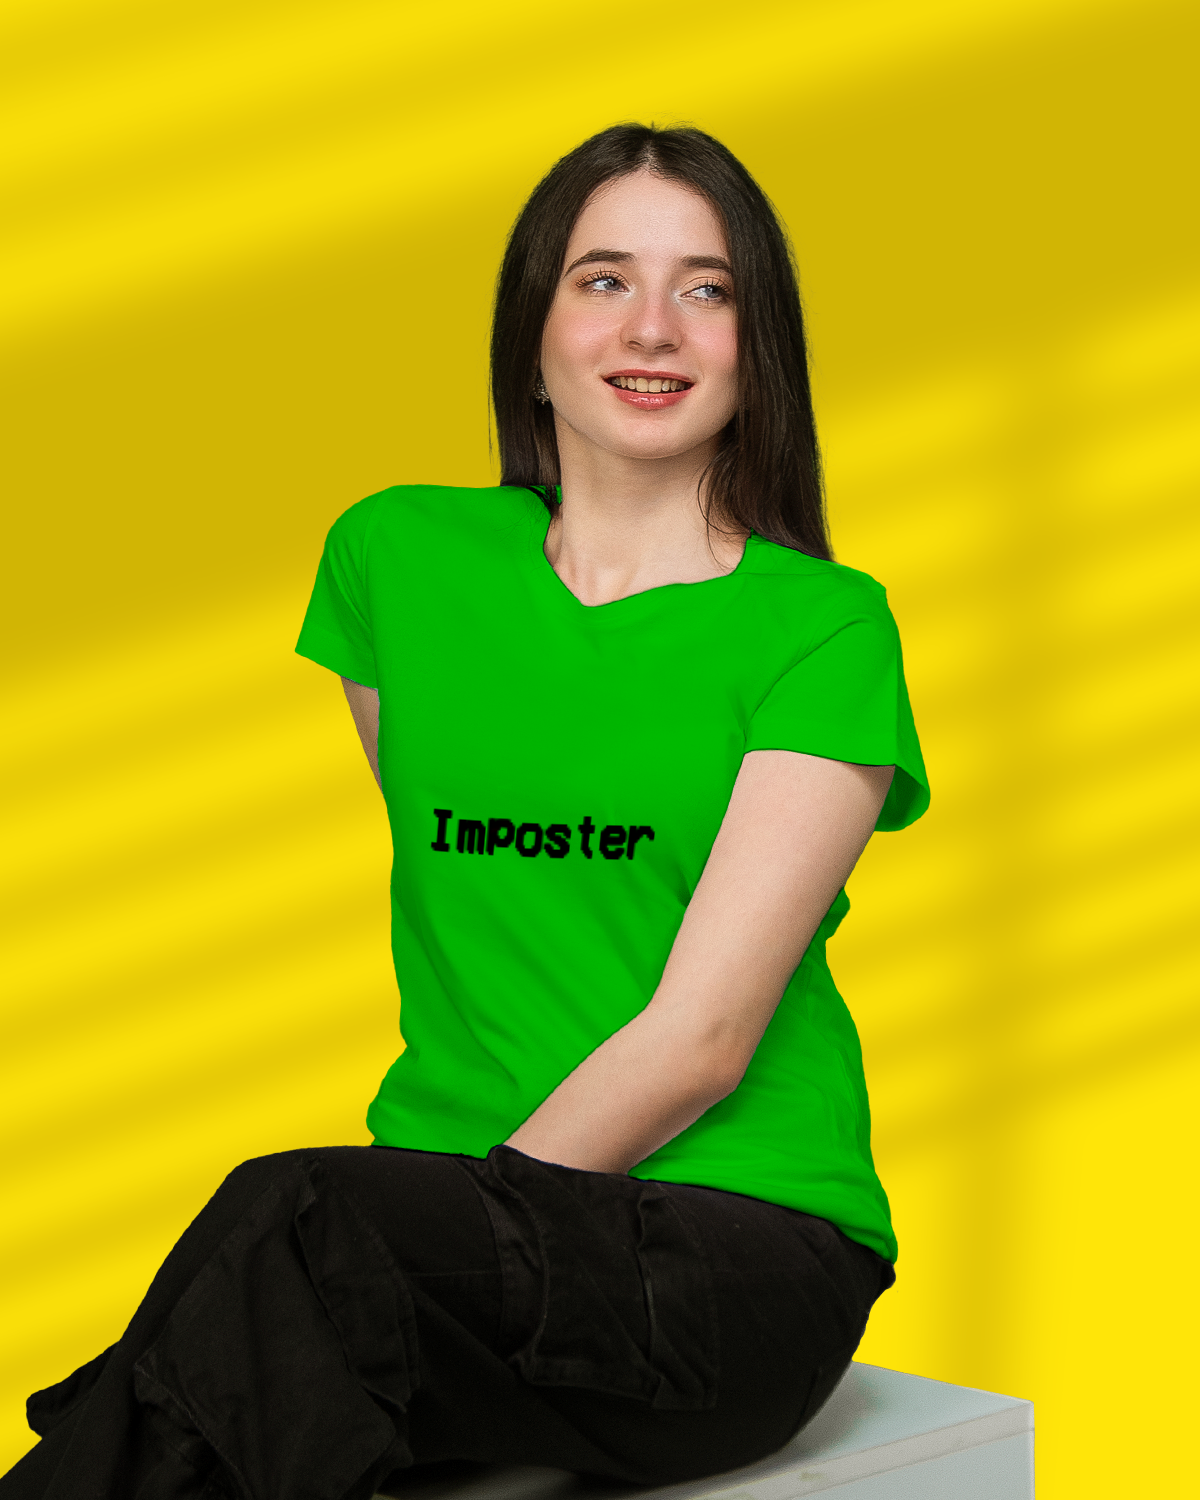 T-shirt For Women (Imposter)